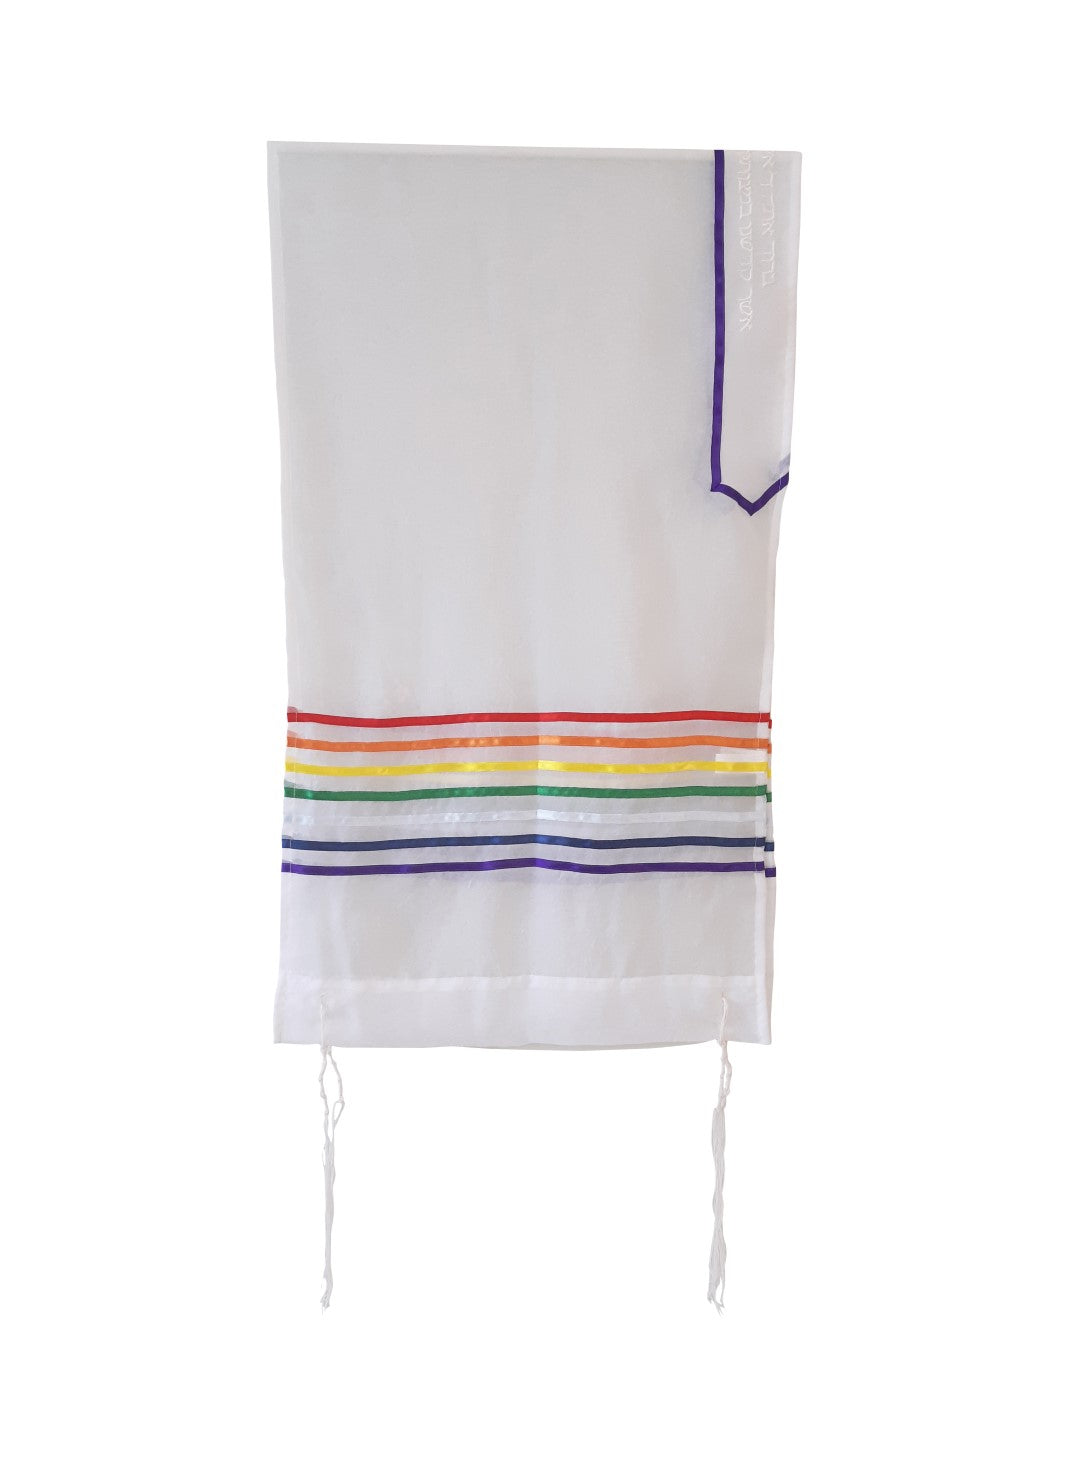 Handmade Sheer Rainbow Tallit, Joseph's Coat of Many Colors Tallis, Bat Mitzvah Tallit hung, Talit for Woman, Tzitzit